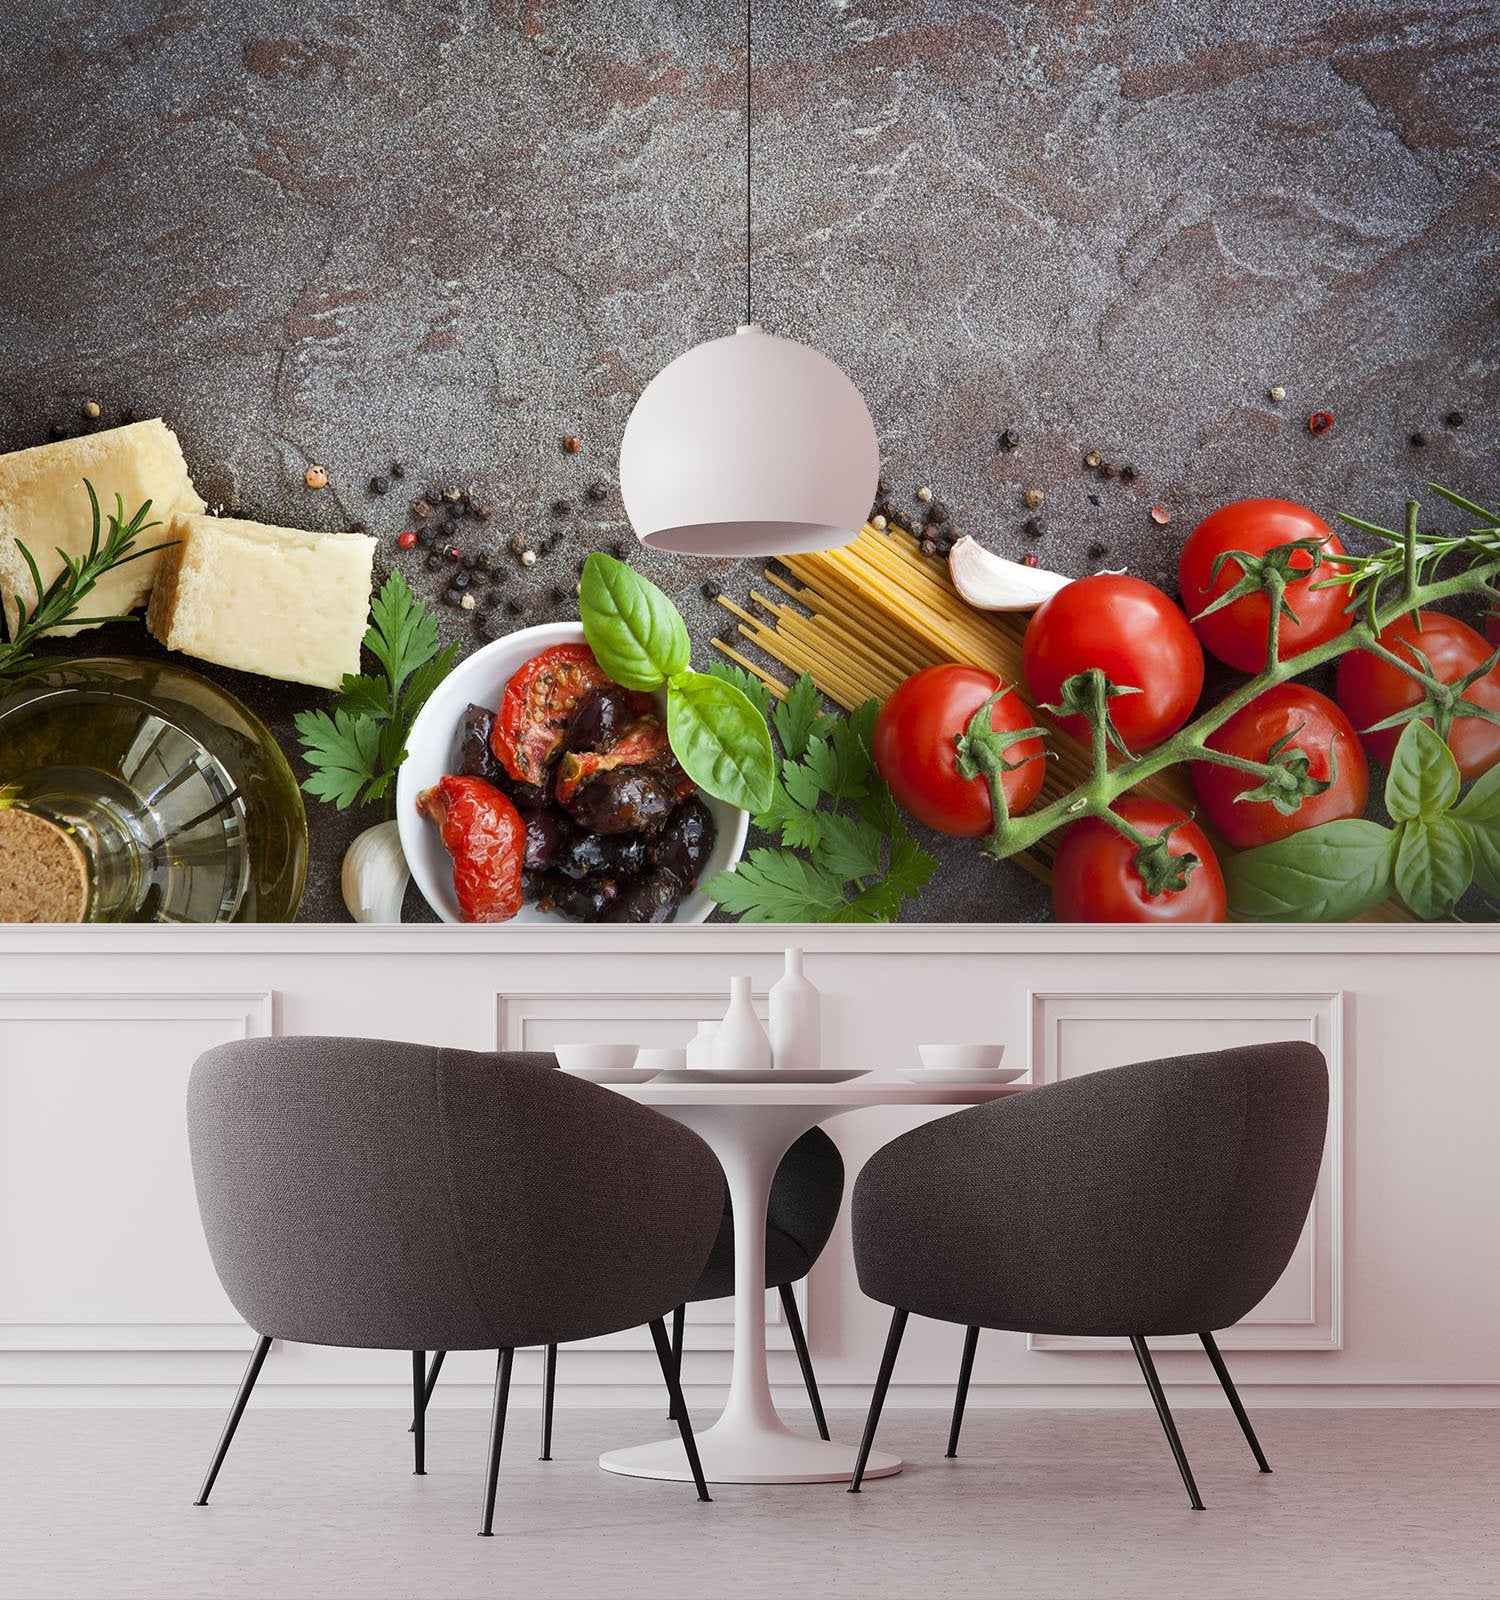 3D Kitchen Dishes Vegetables 07 Wall Murals Wallpaper AJ Wallpaper 2 